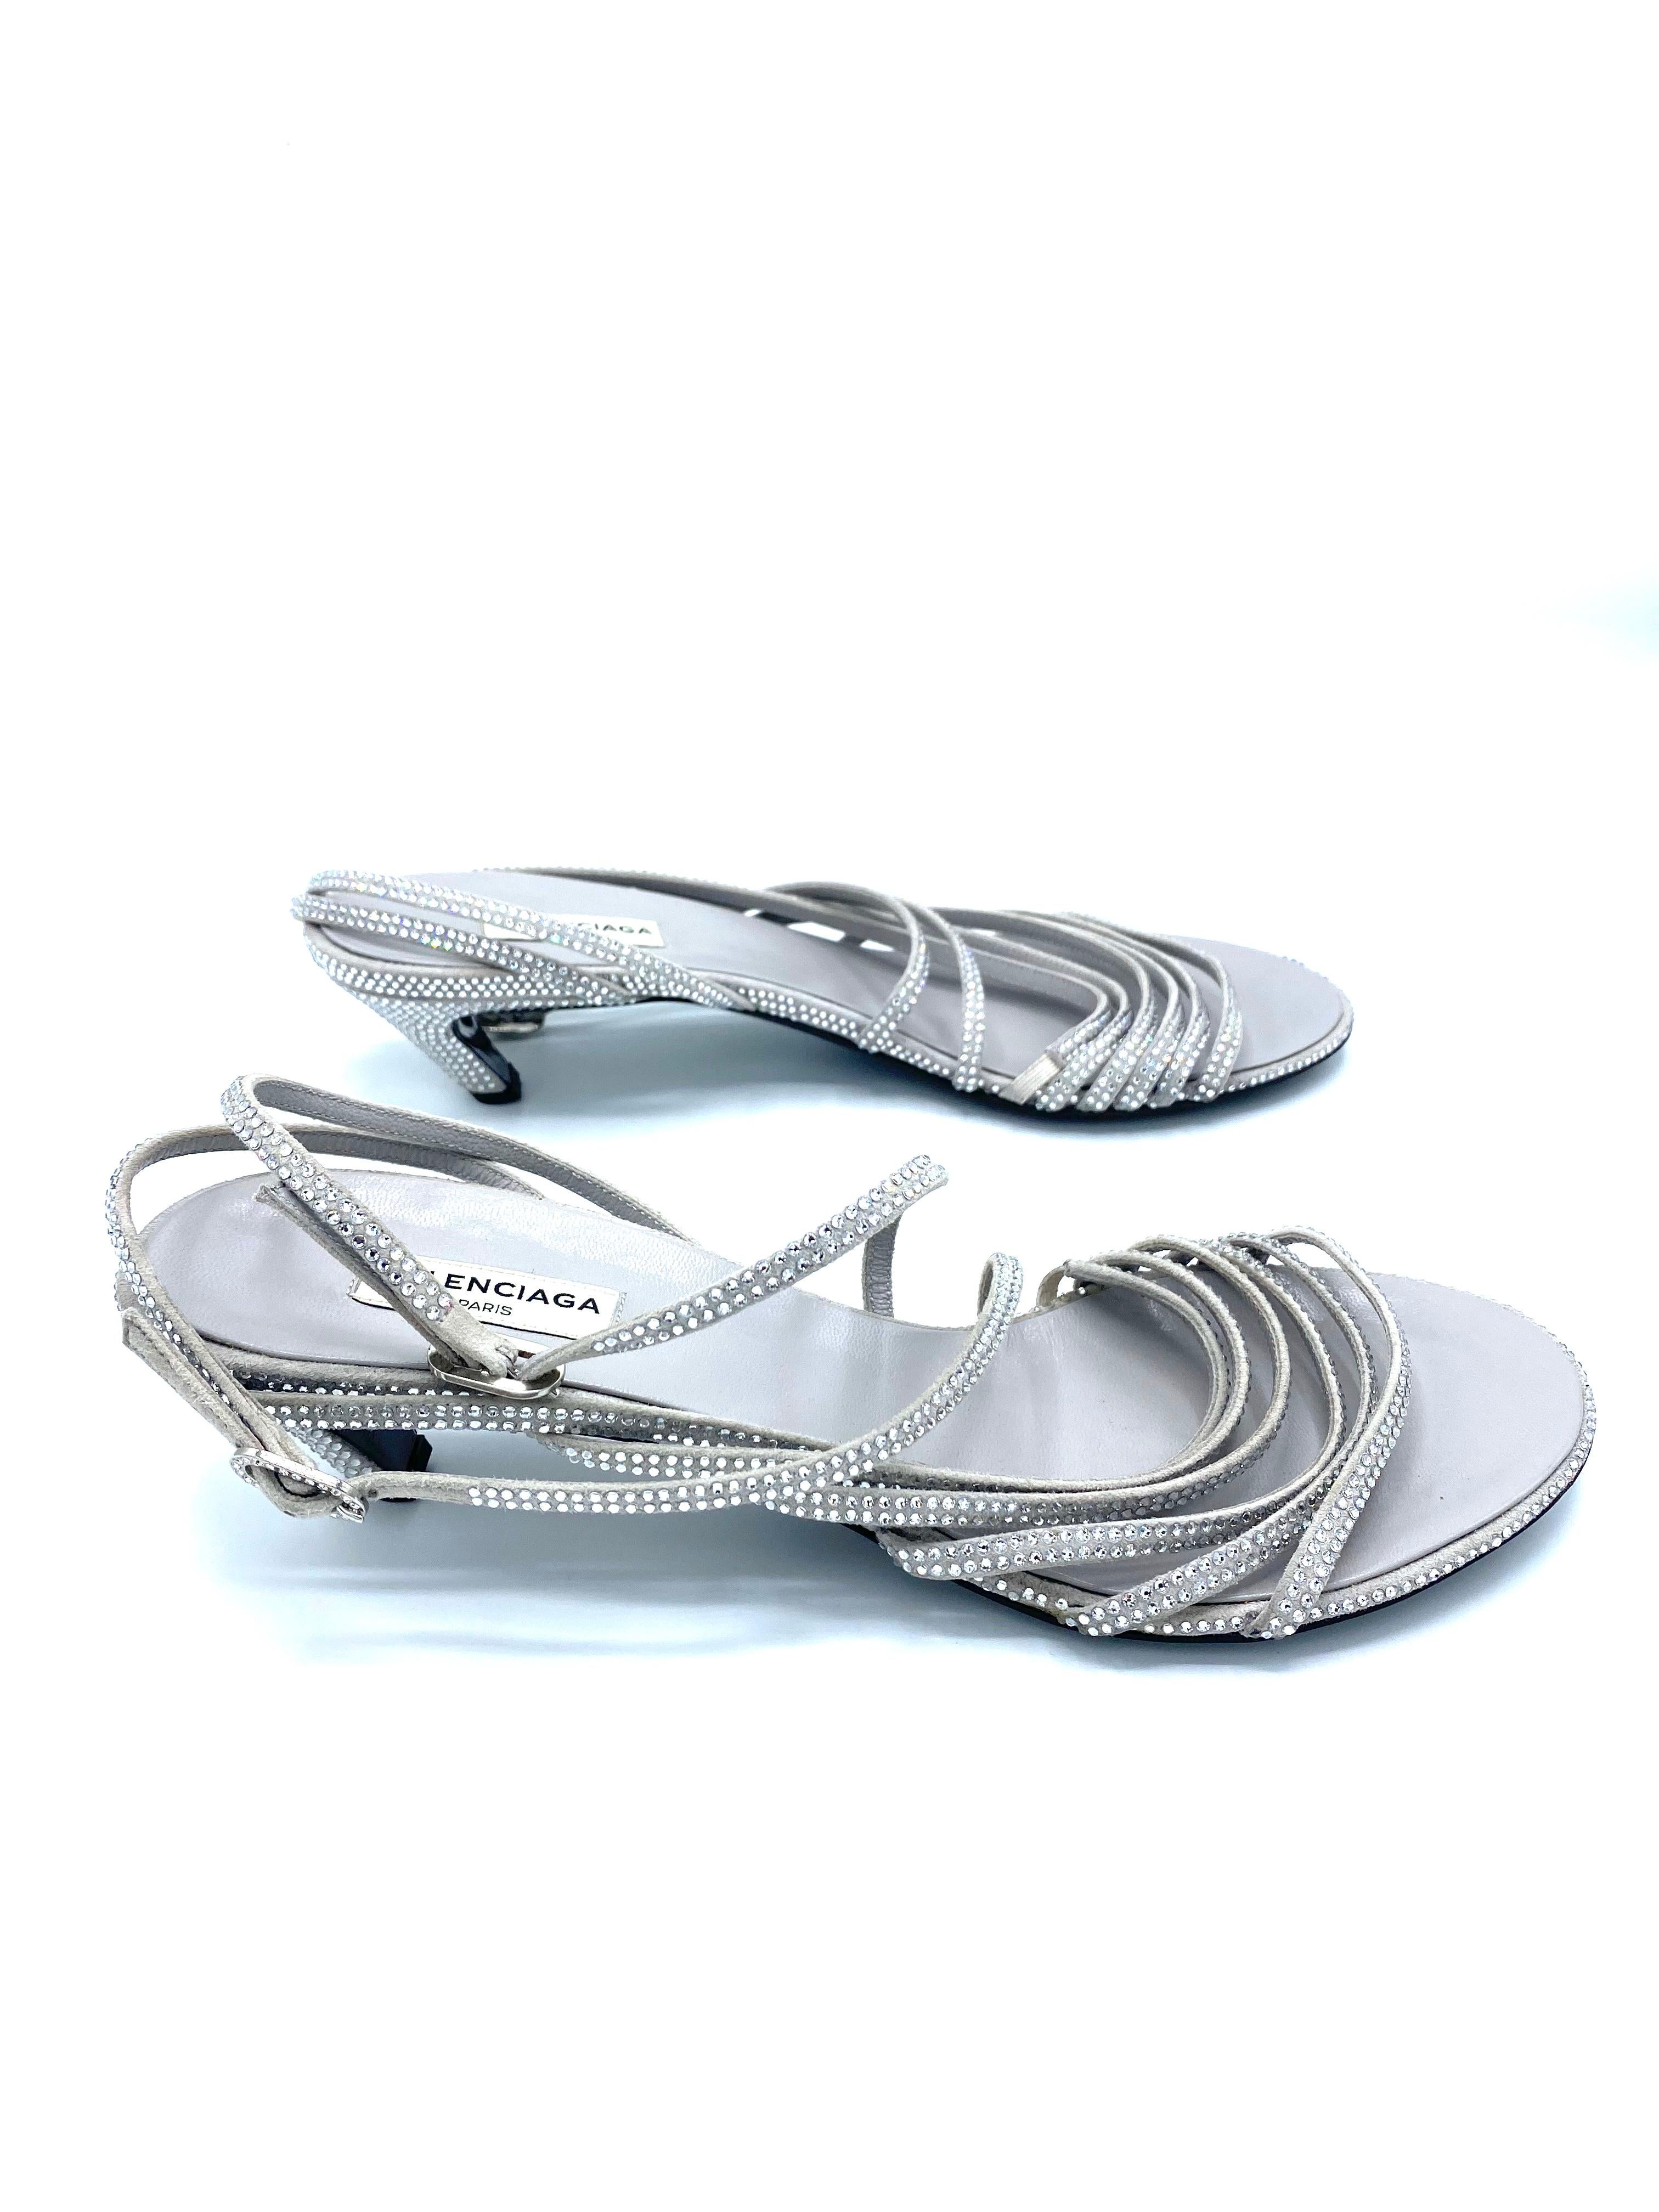 Gray Balenciaga Crystal Embellished Grey Suede Strappy Heels Sandals Size 39 